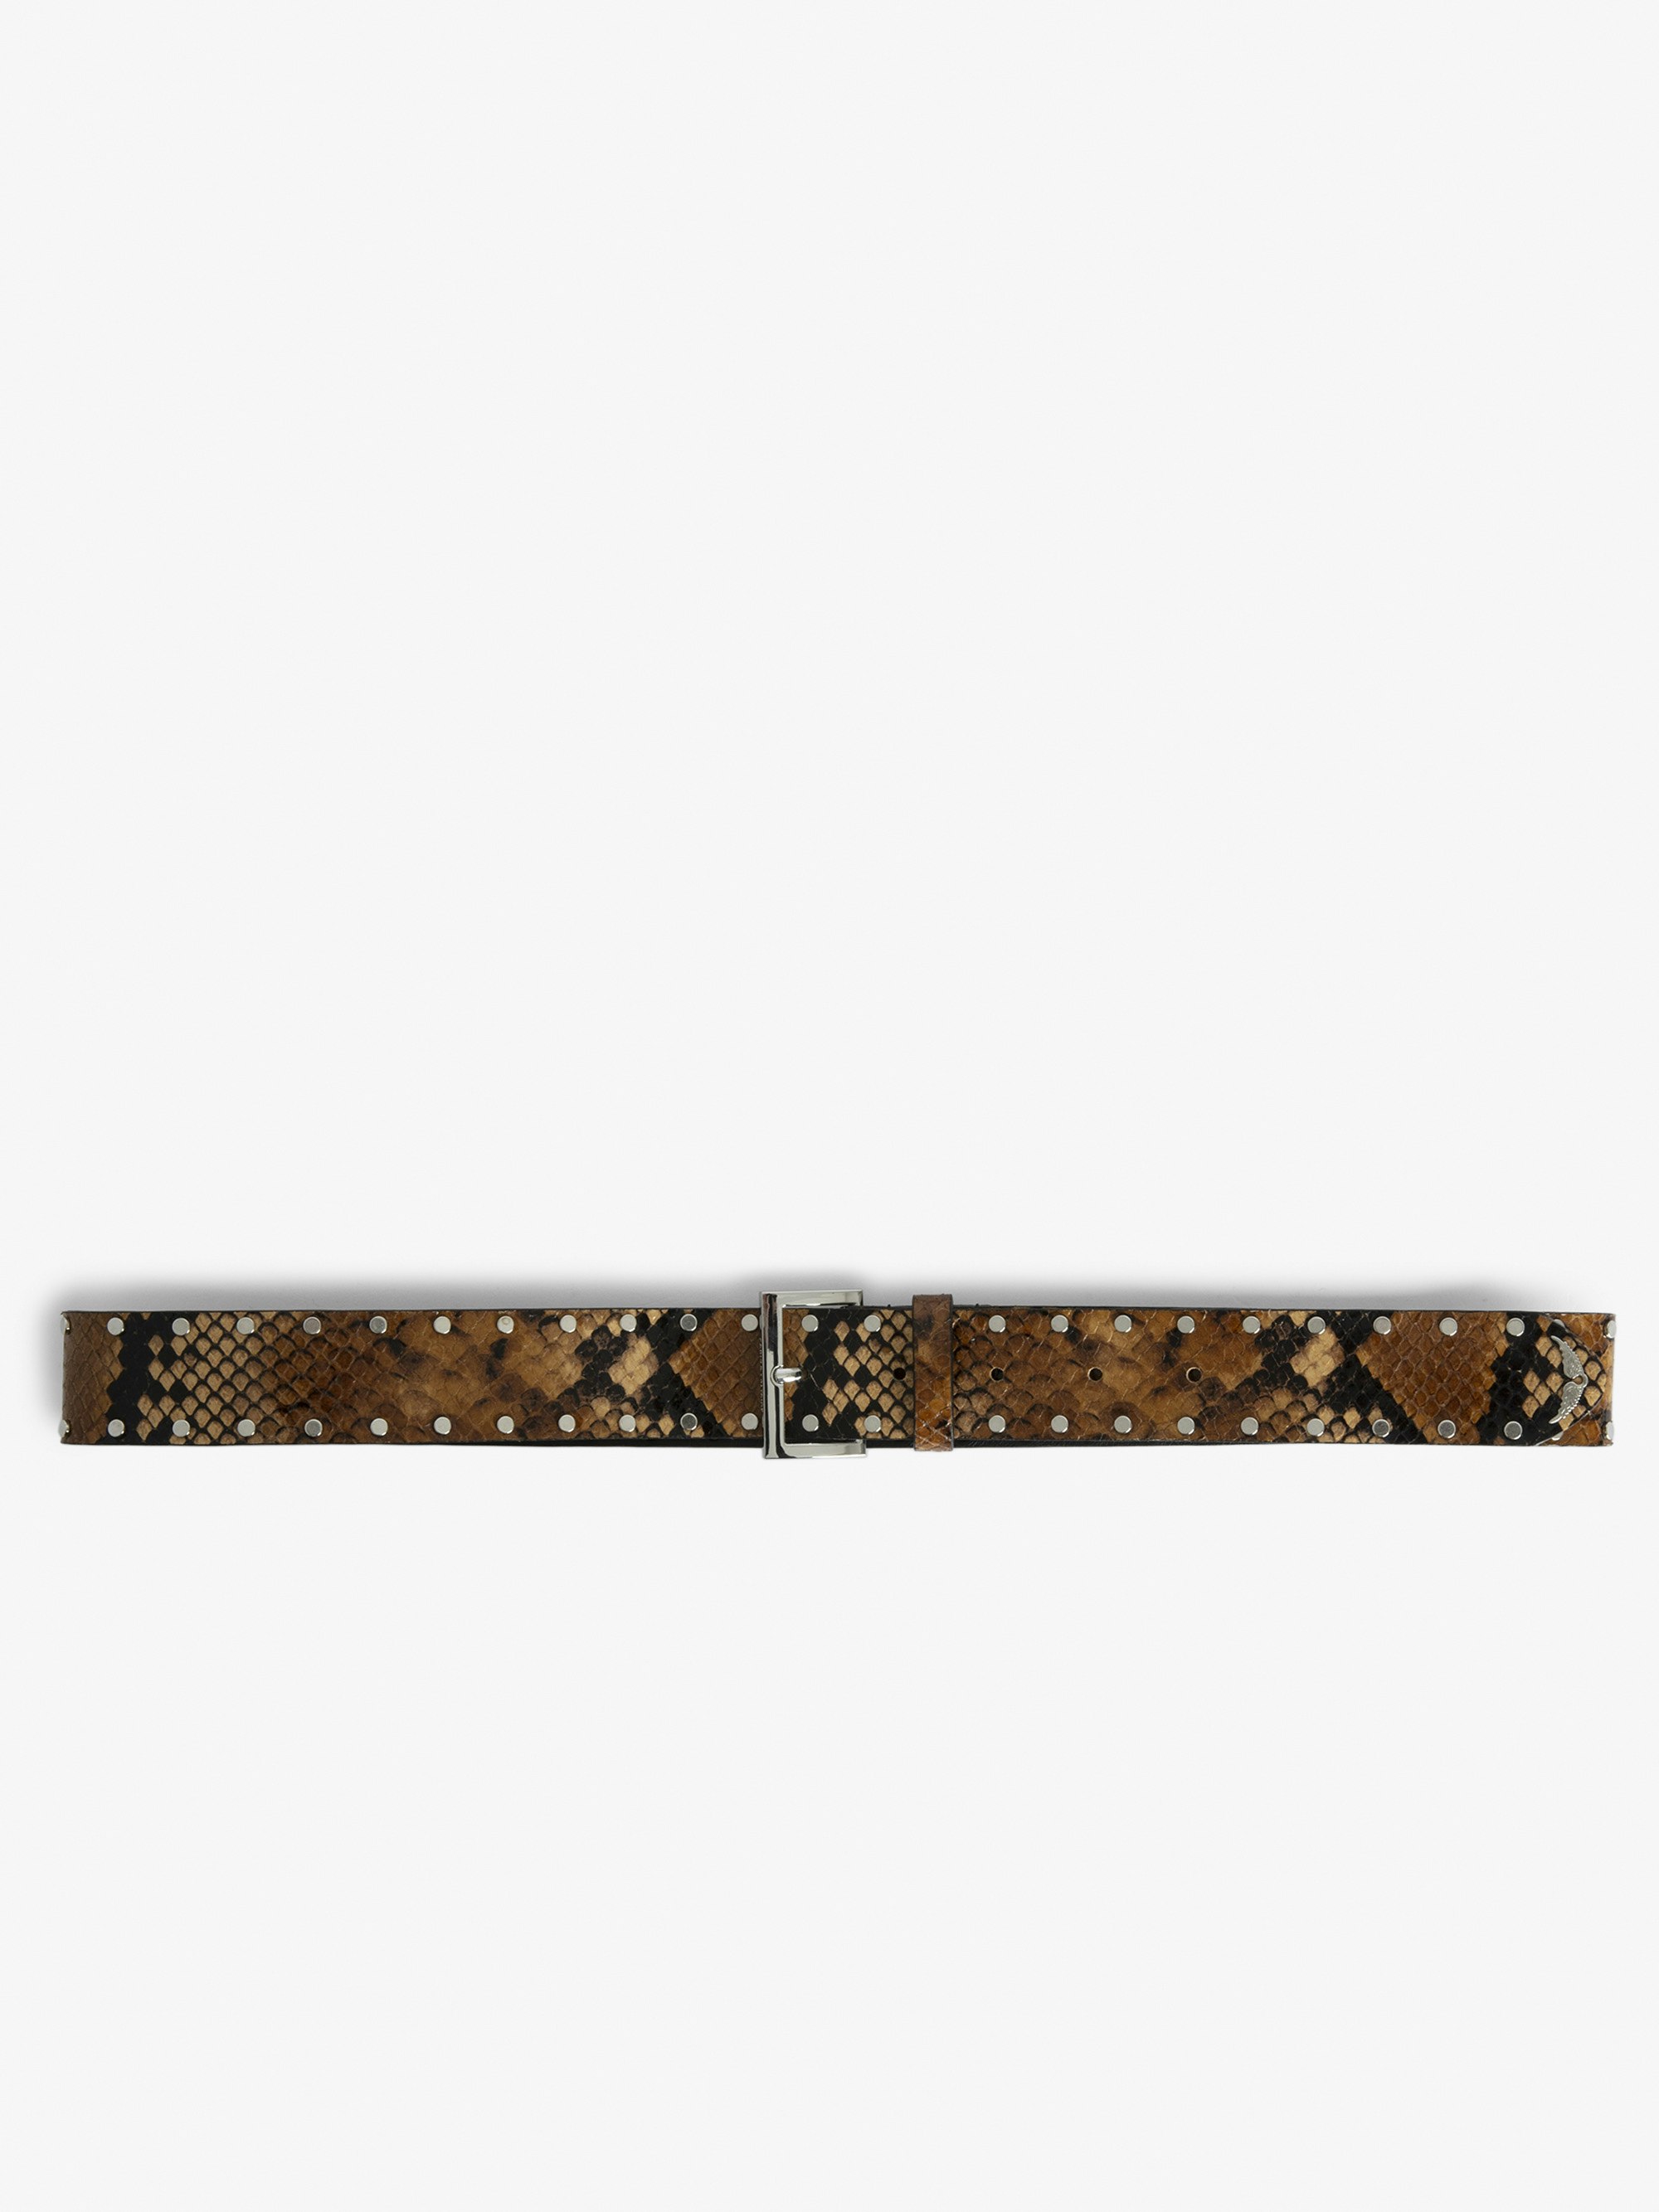 Starlight Belt - Brown faux snakeskin leather belt embellished with studs.